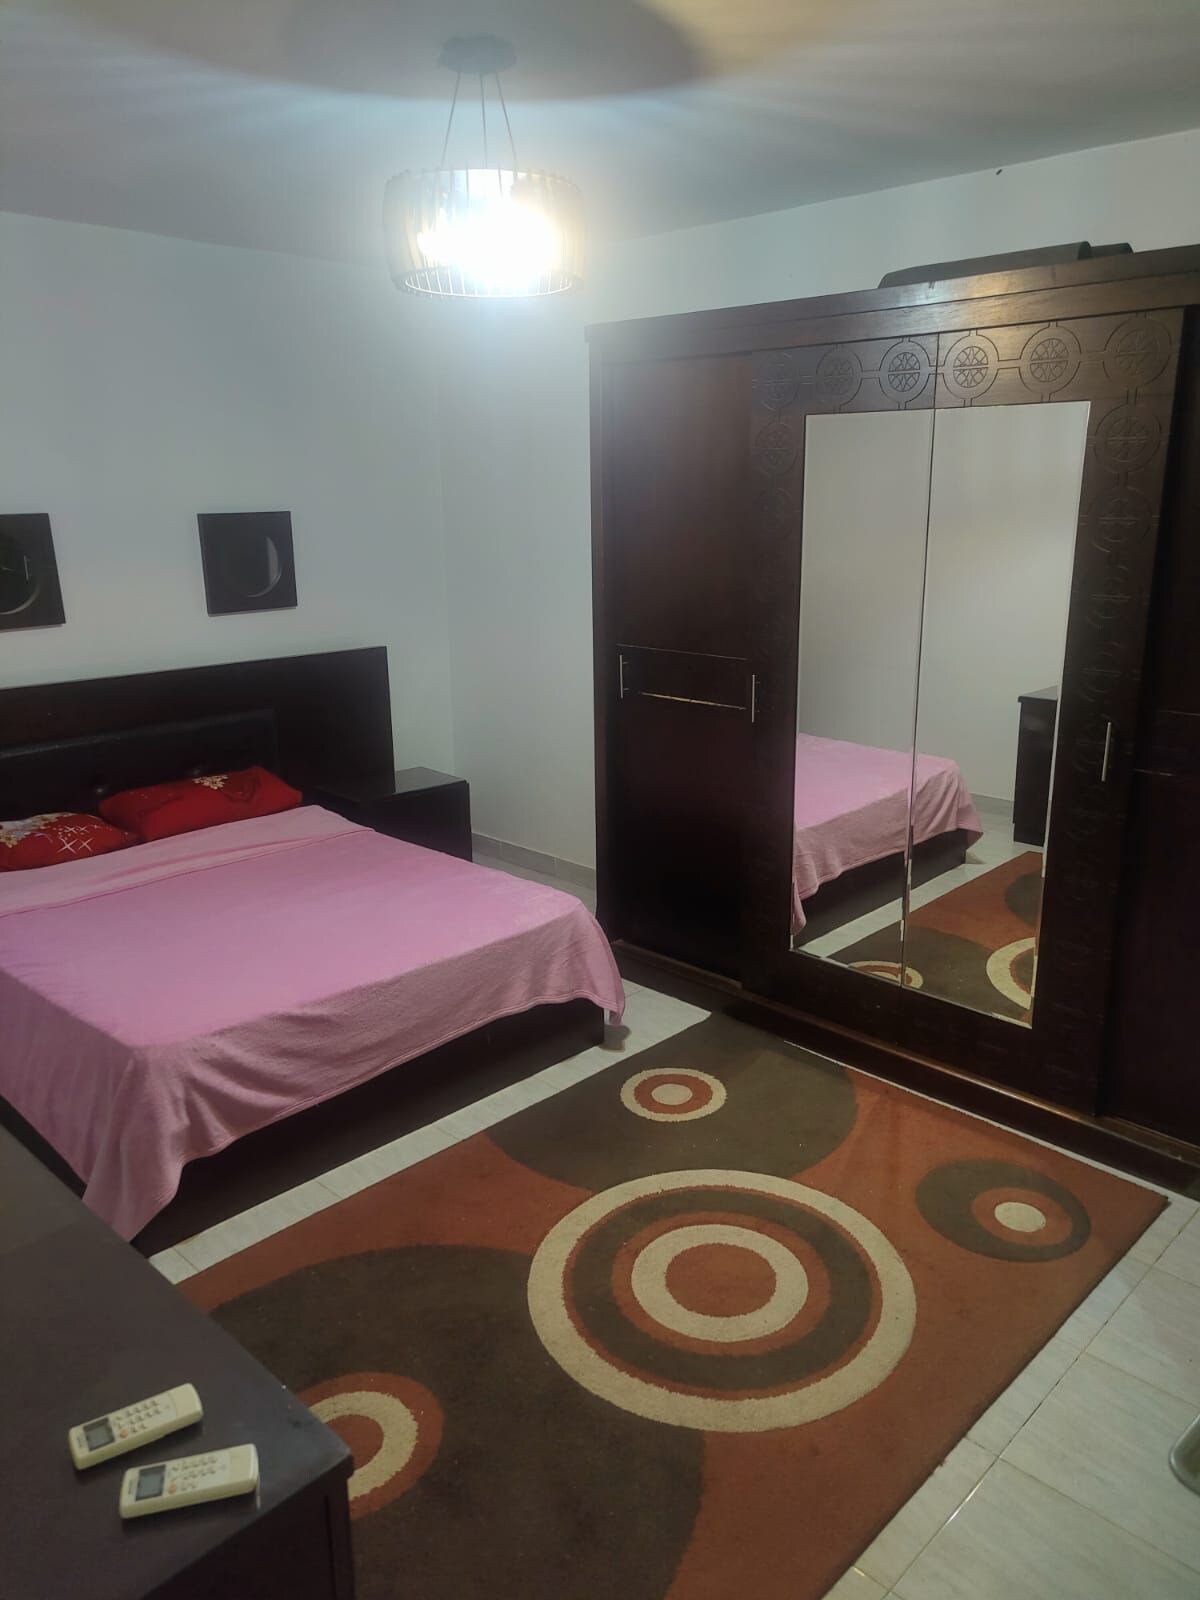 Zamalek 3房间2个卫生间绝佳位置